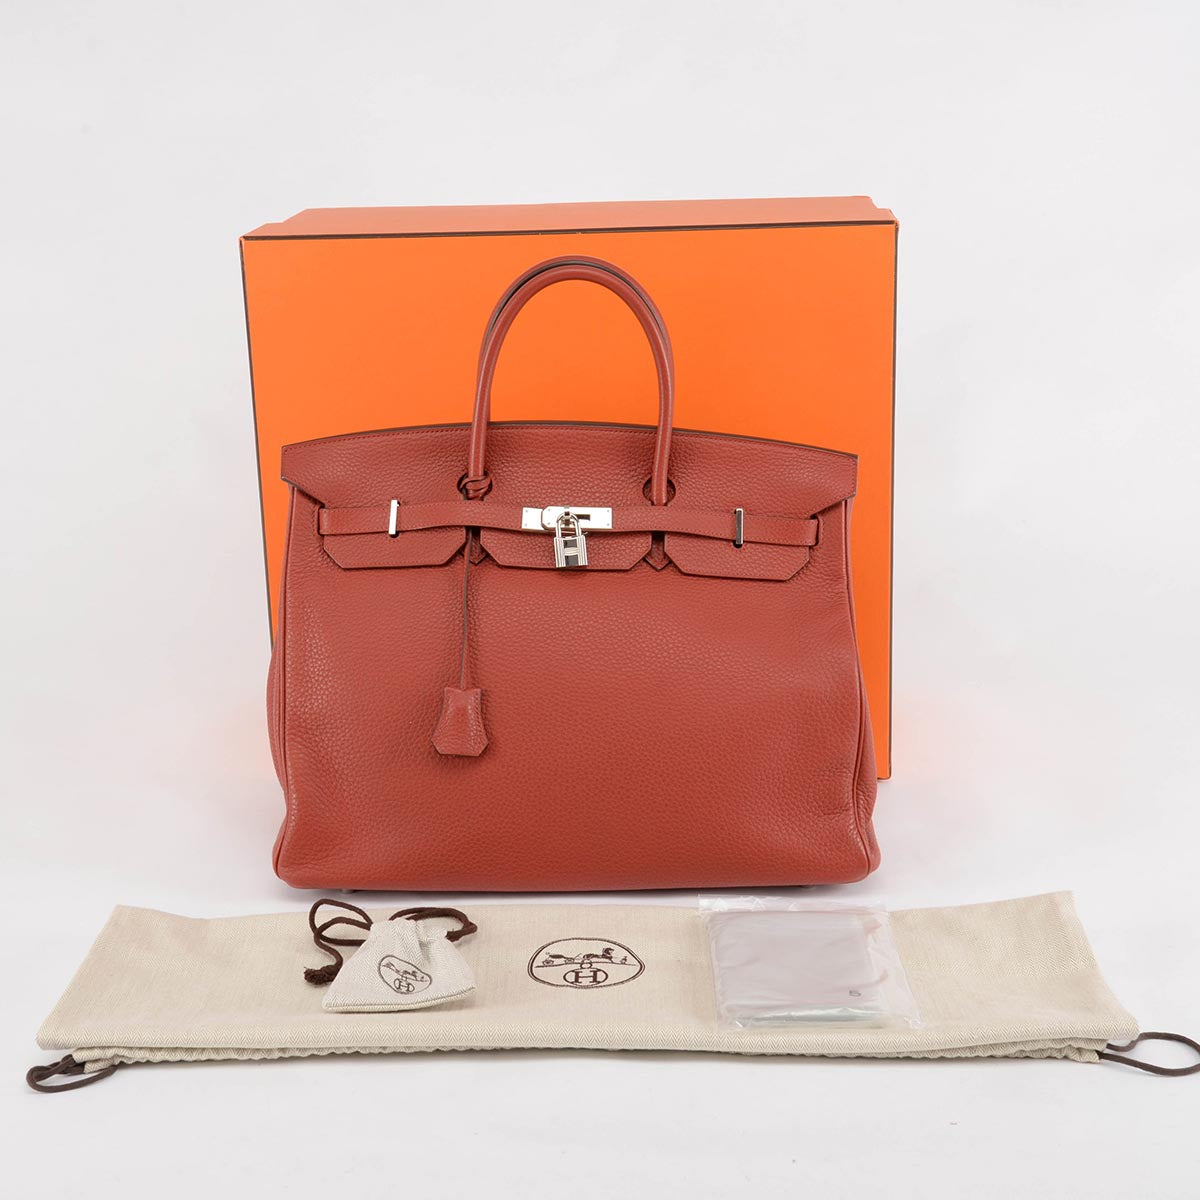 Replica Hermes Birkin 40 Handmade Bag In Canopee Clemence Leather